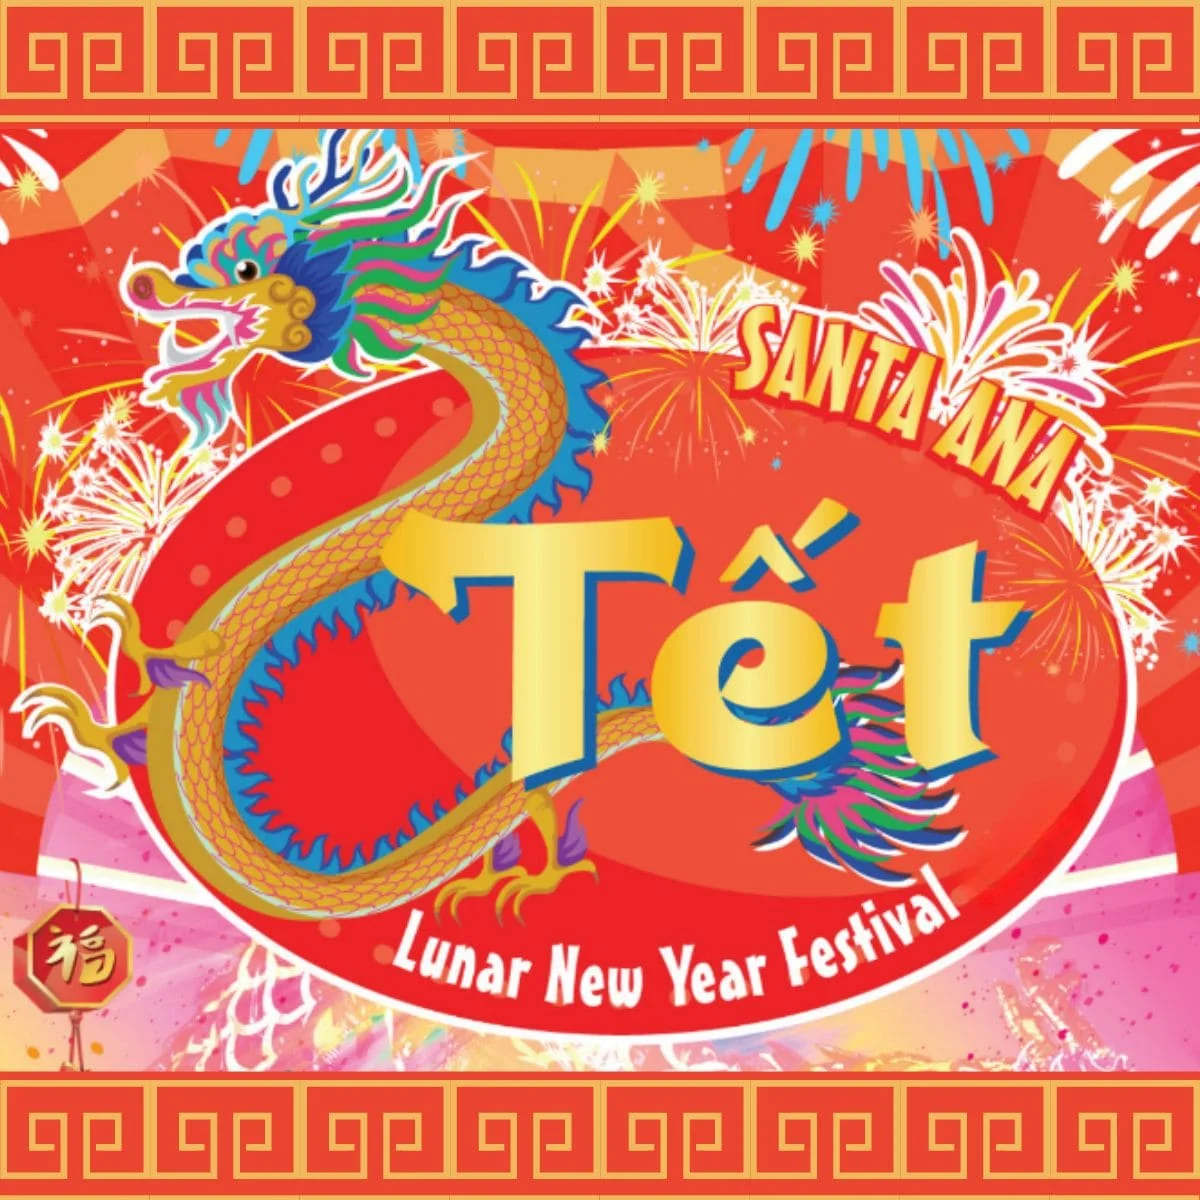 Tet Lunar New Year Festival